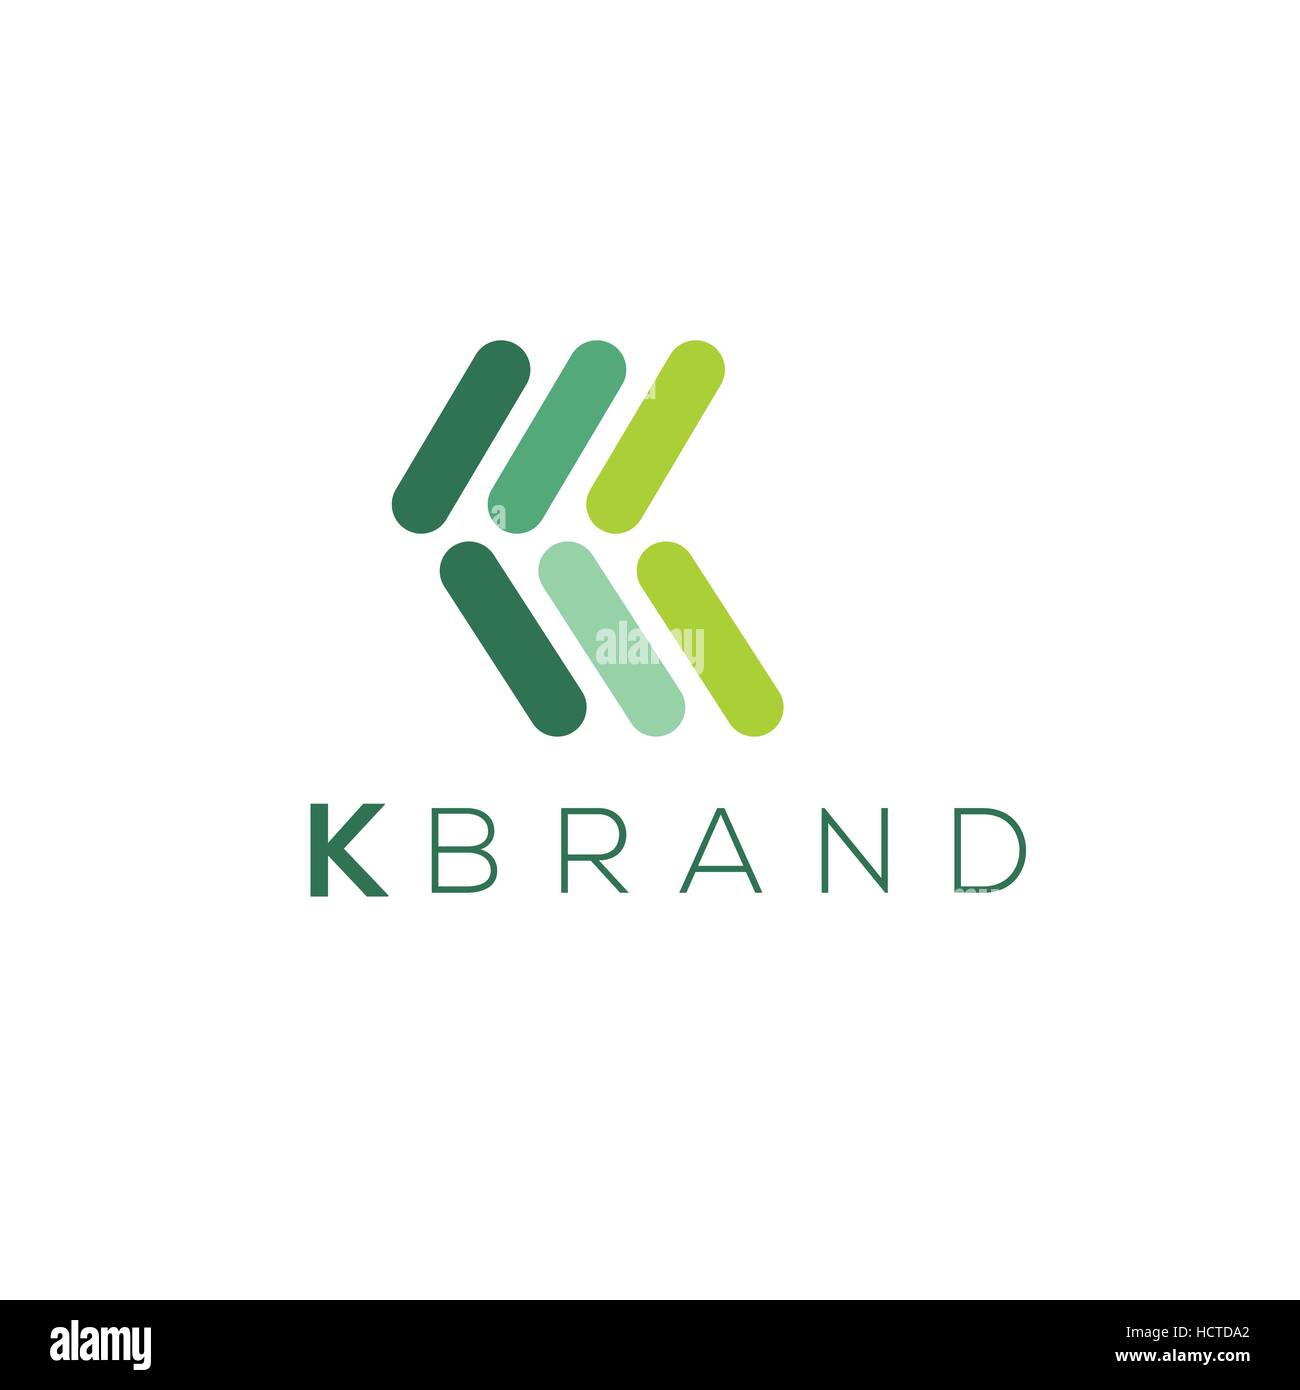 Business Logo Design Template